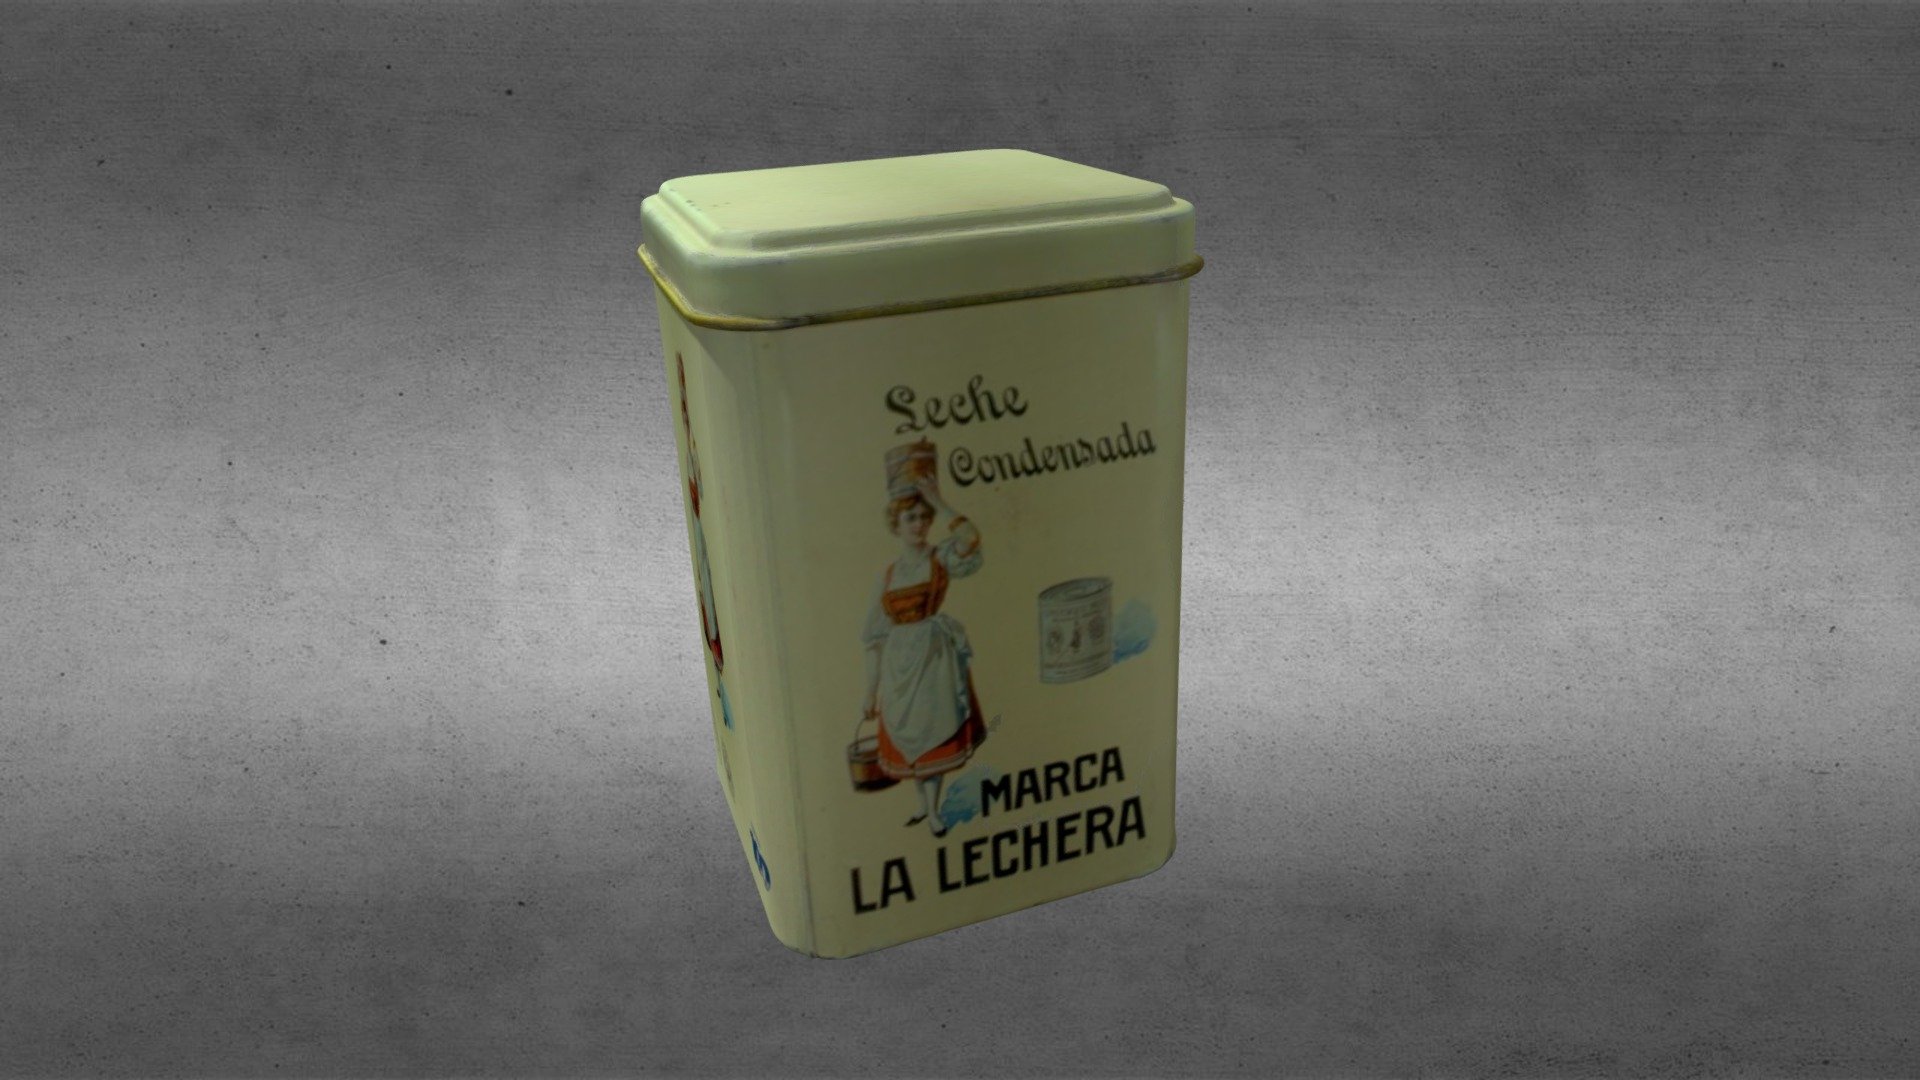 condensed milk can LA LECHERA,
Lata de leche condensada LA LECHERA,
Scanning with EinScan SE - condensed milk can - lata leche condensada - Download Free 3D model by badwolfmx3 3d model